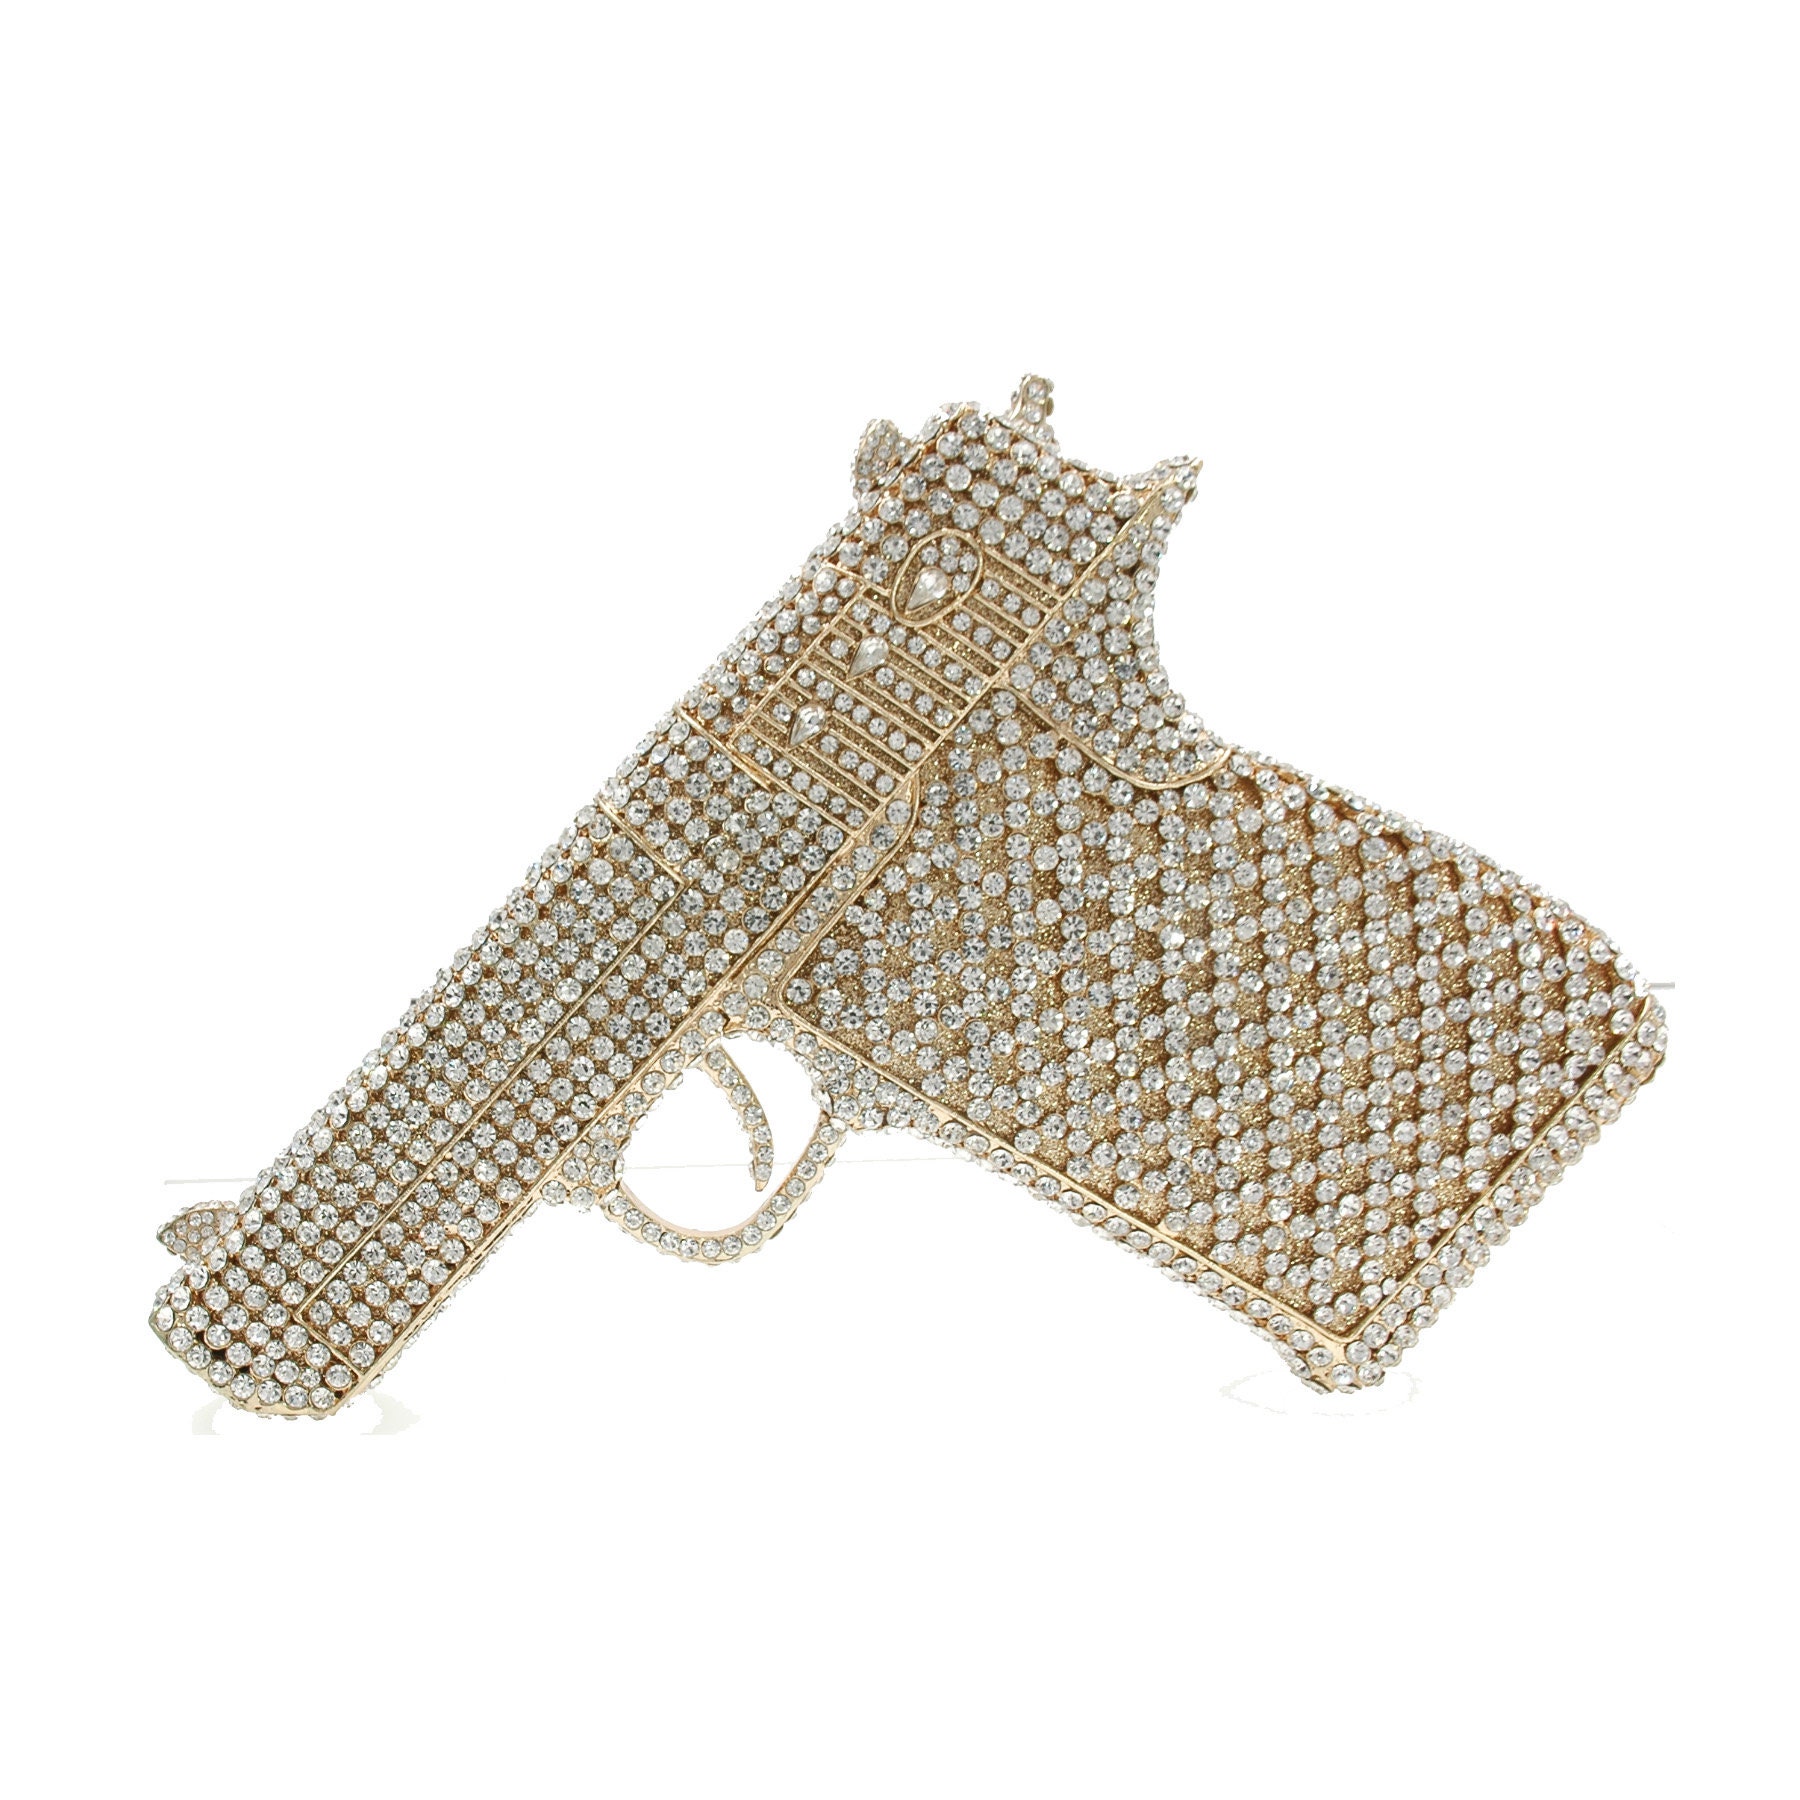 5x PCS Lot - Gold Gun Keychain Pistol Keyring Novelty Big Key Ring